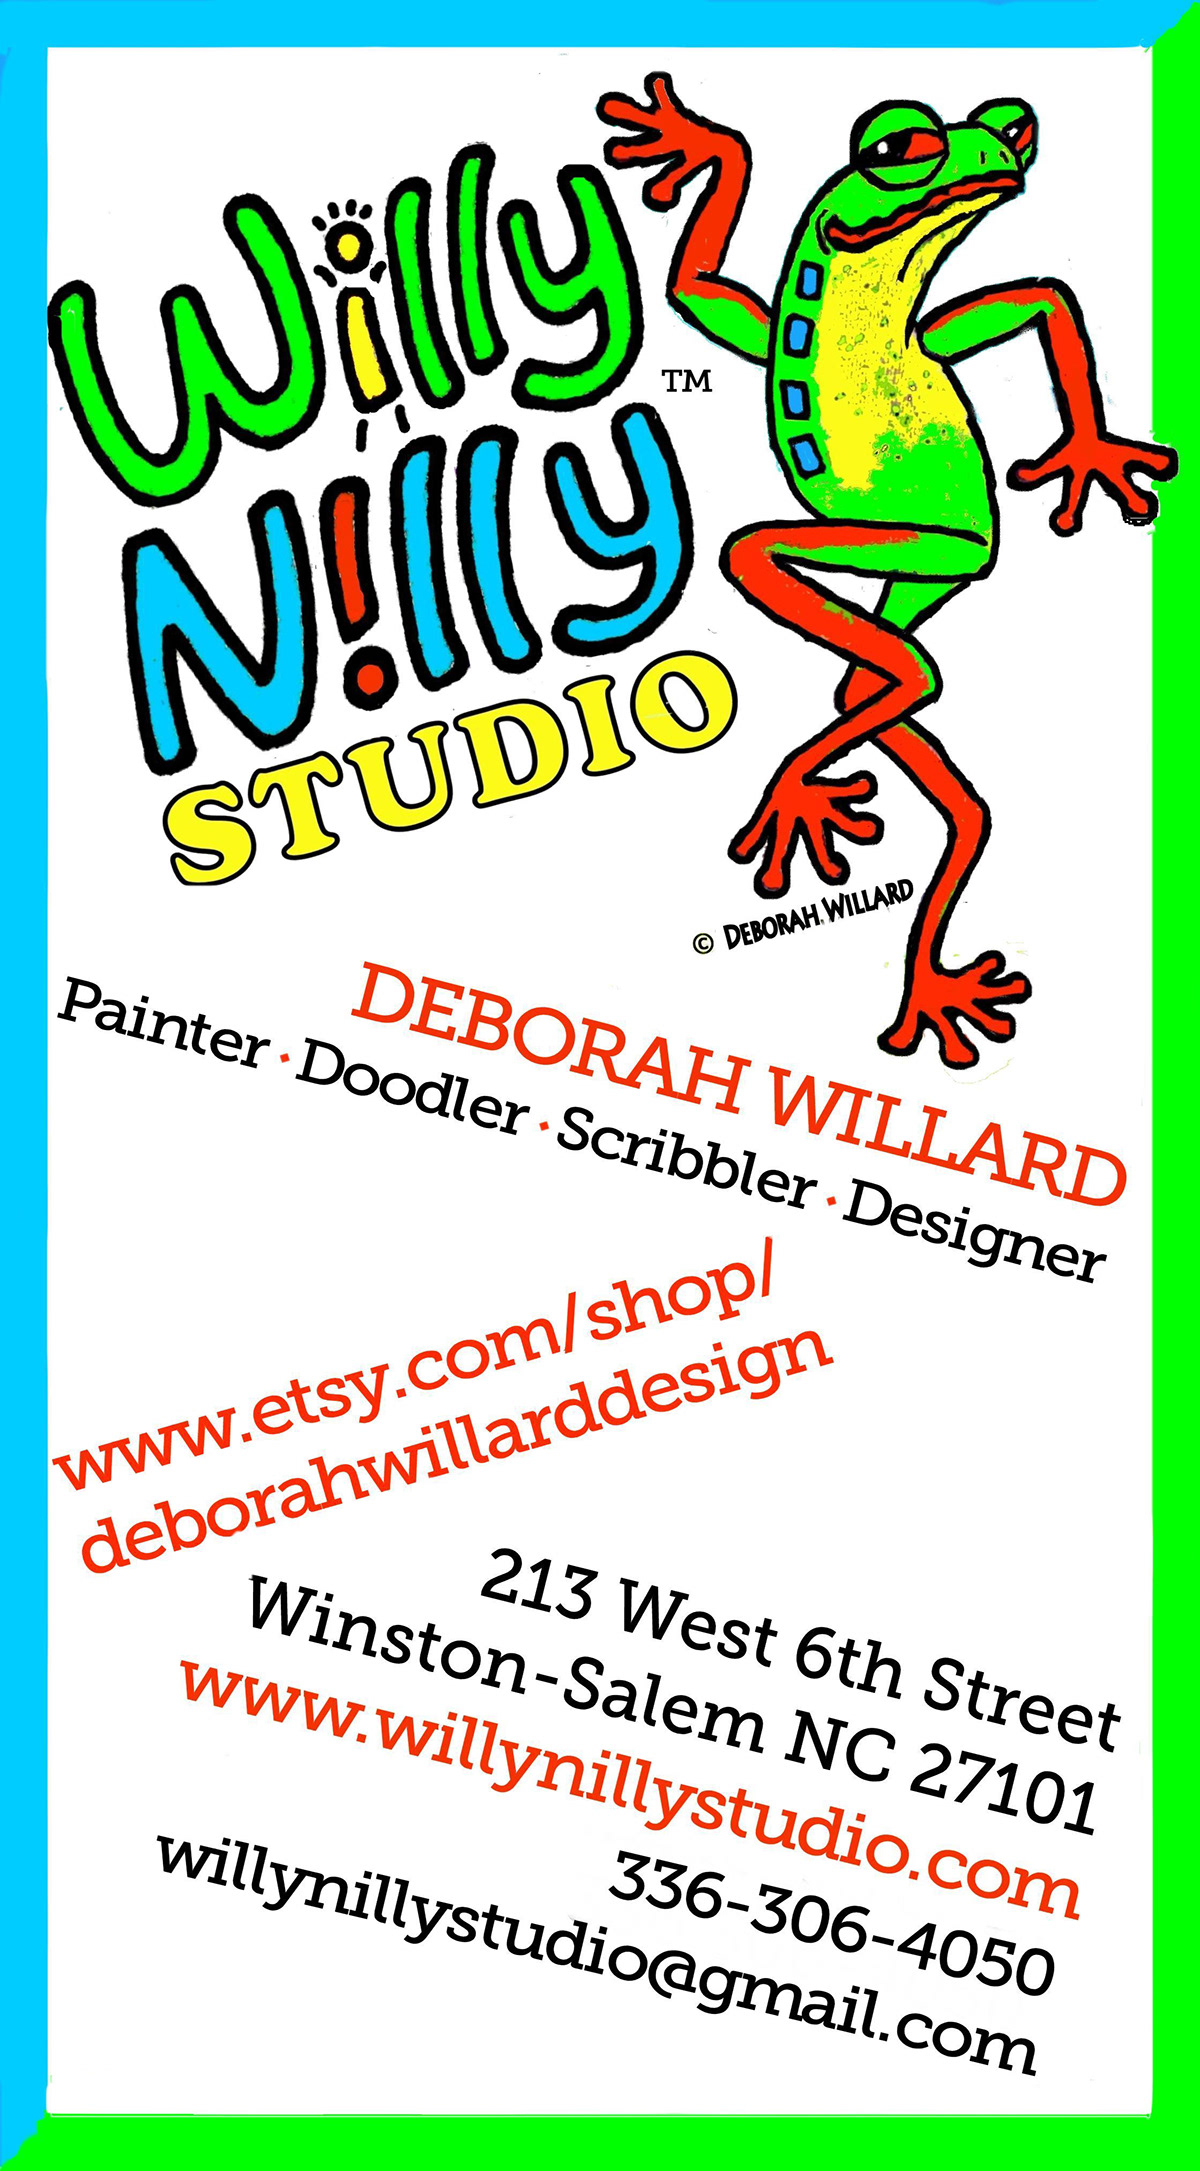 Self Promotion willy nilly studio artist deborah willard painter doodler scribbler Winston Salem artist dancing frog tree frog whimsical Character trademark